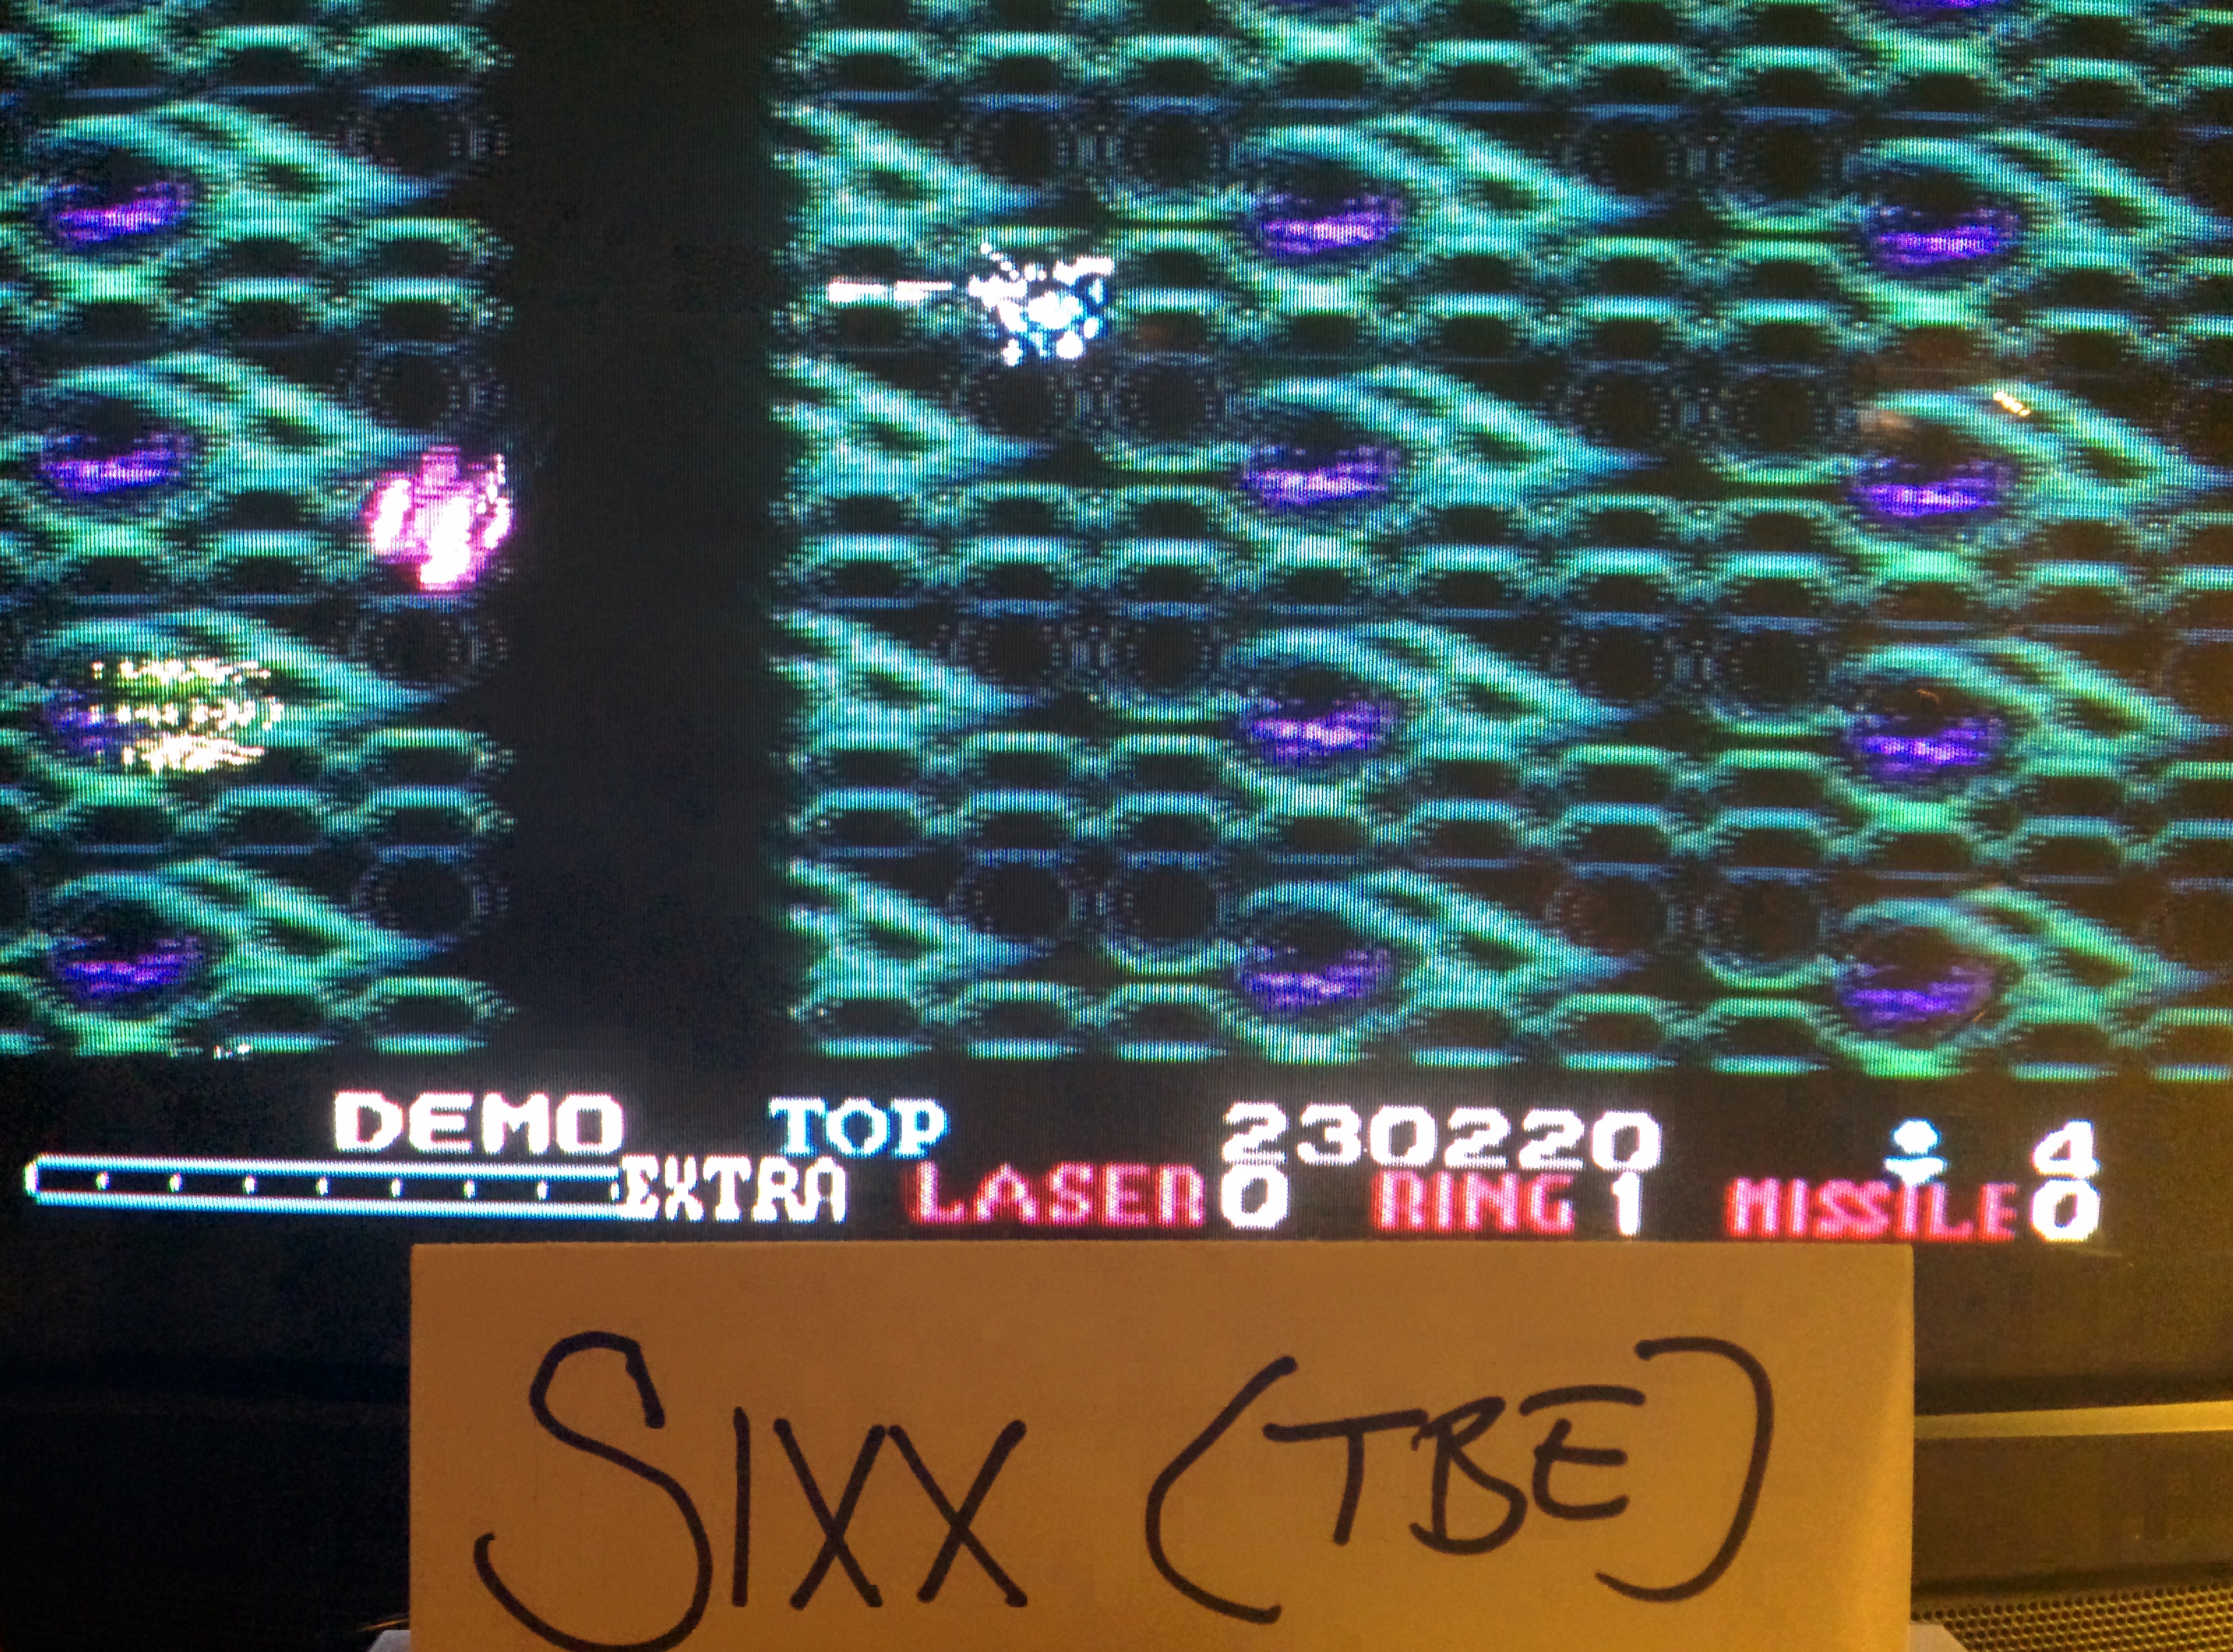 Sixx: Burai Fighter: Eagle (NES/Famicom Emulated) 230,220 points on 2014-05-04 14:26:15